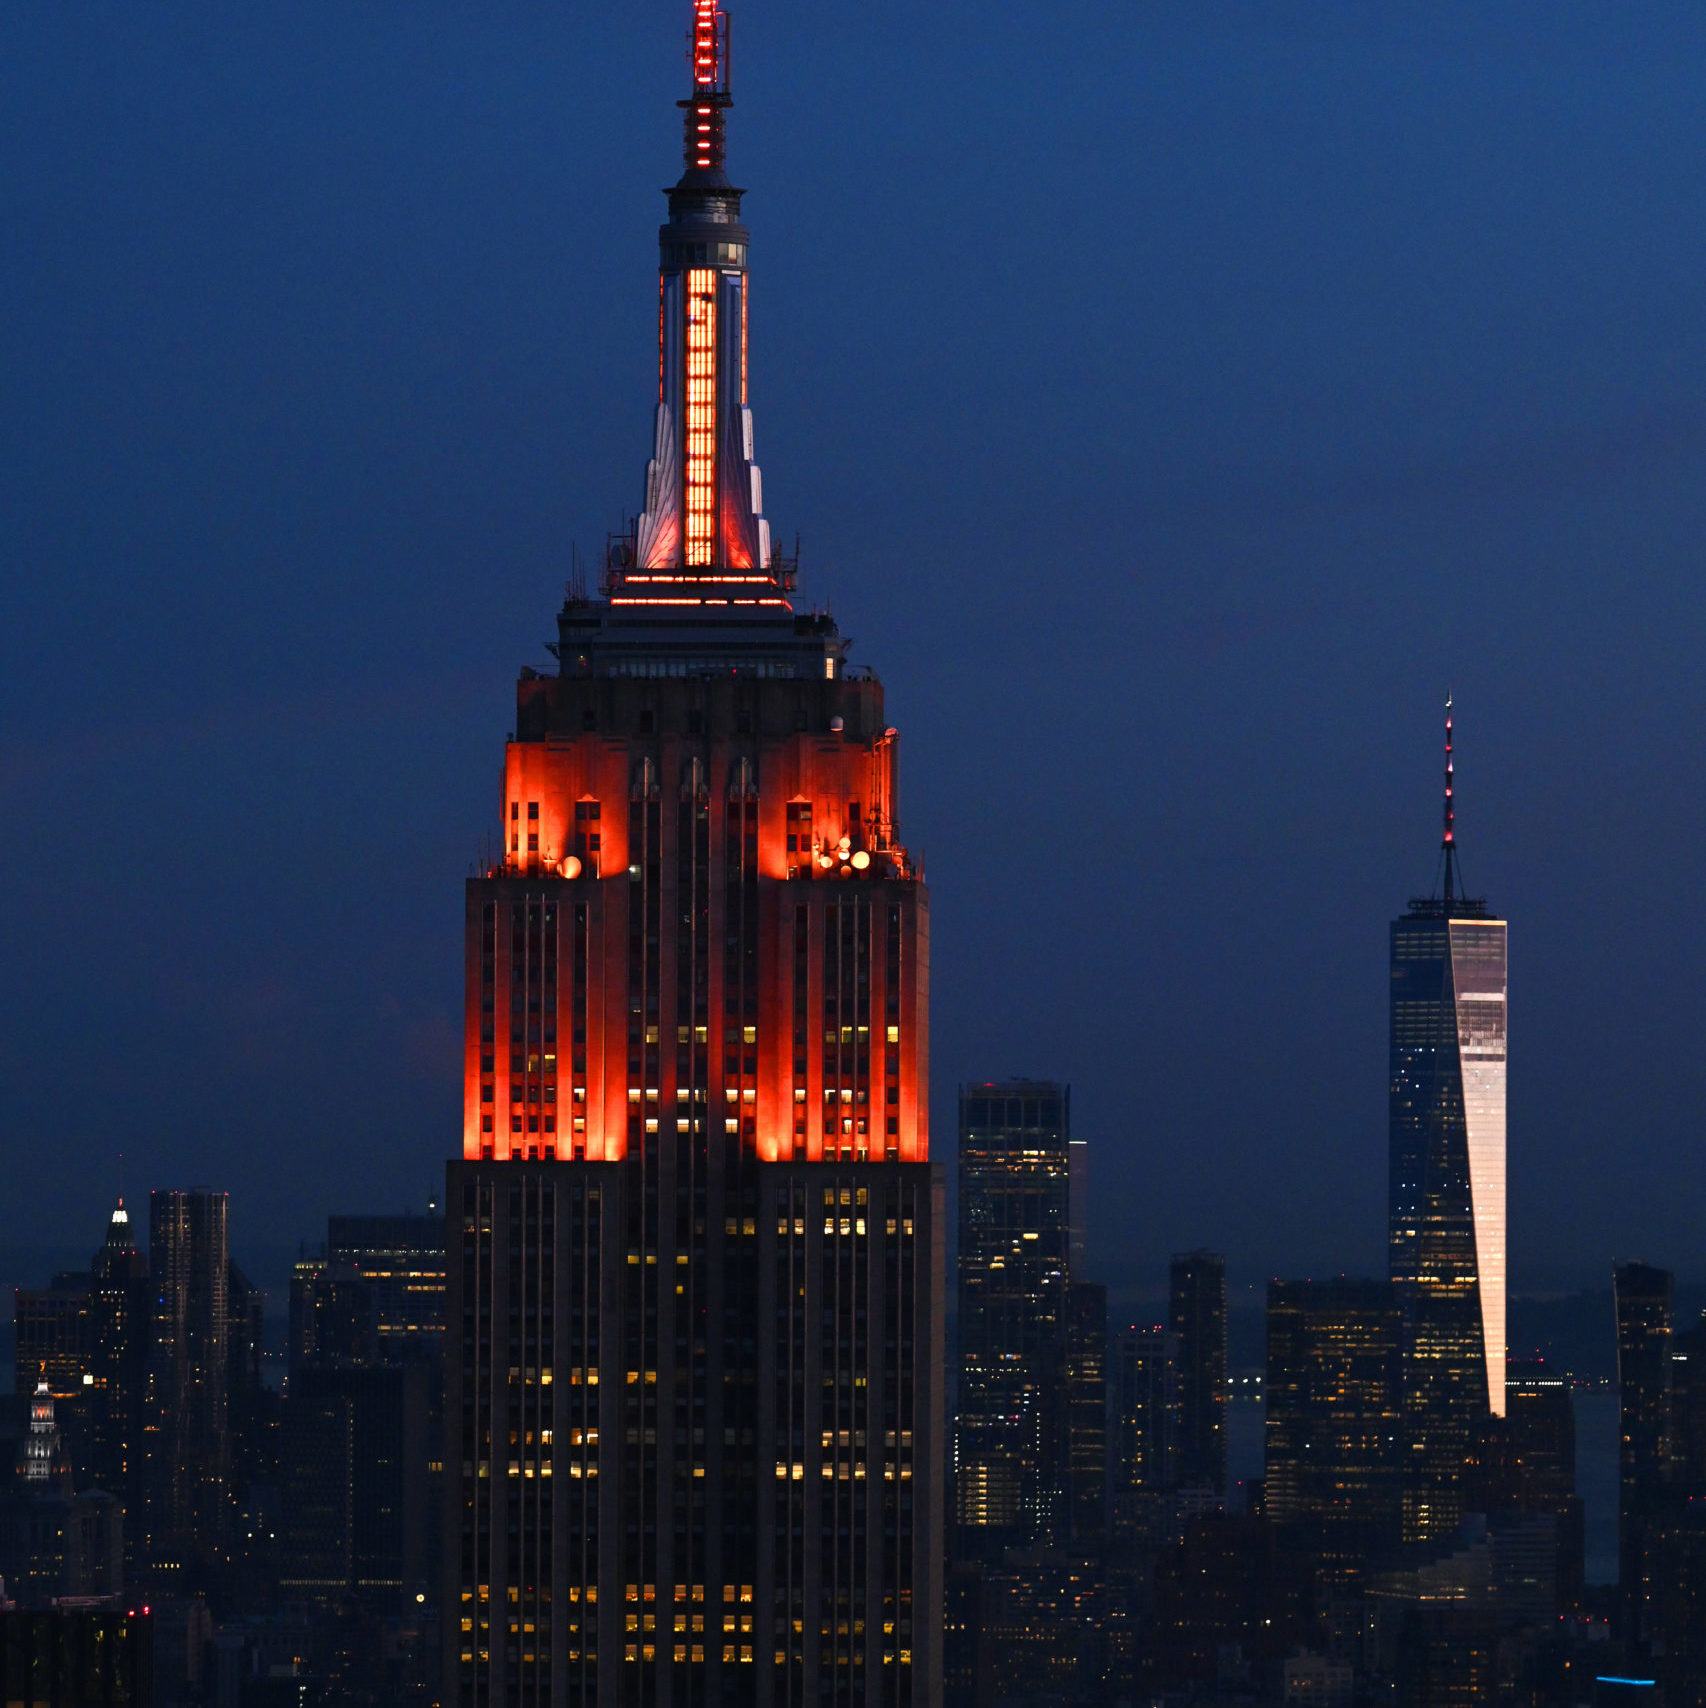 The Empire State Building lit orange